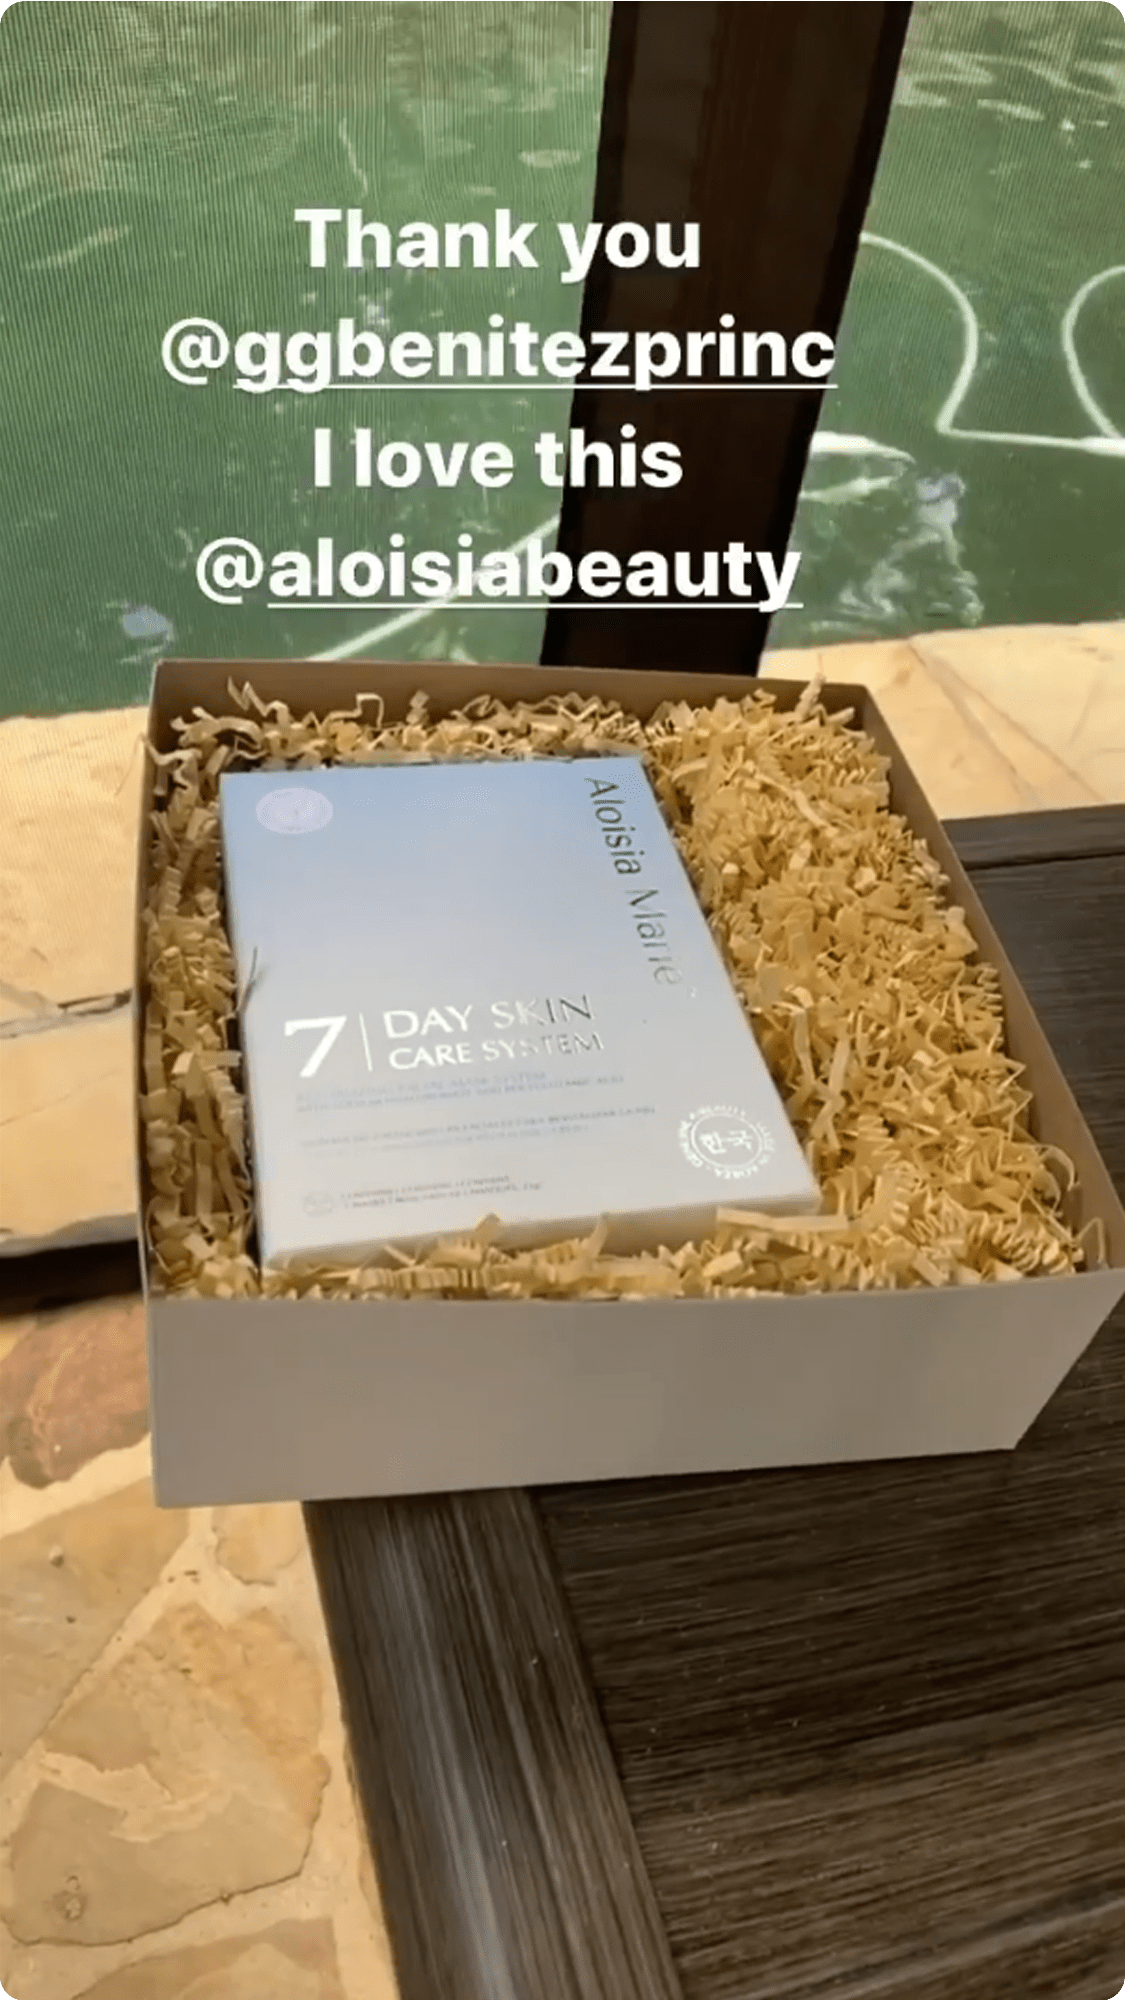 Bambi Benson Mentioning Aloisia Beauty and GG Benitez in her instagram Stories